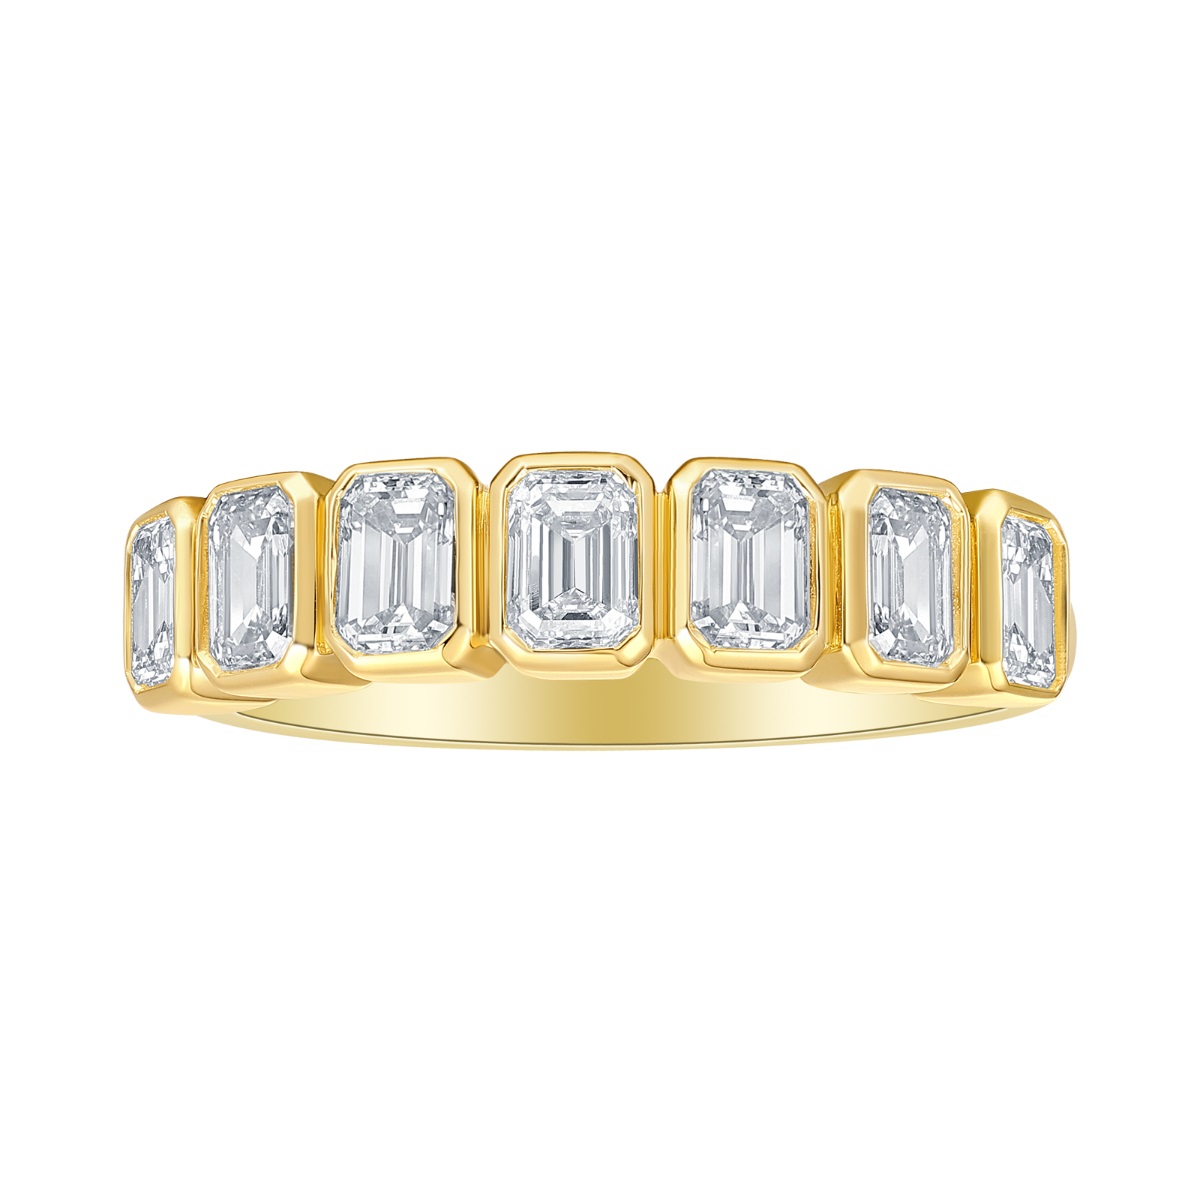 R36972WHT – 18K Yellow Gold Diamond Ring, 1.41 TCW